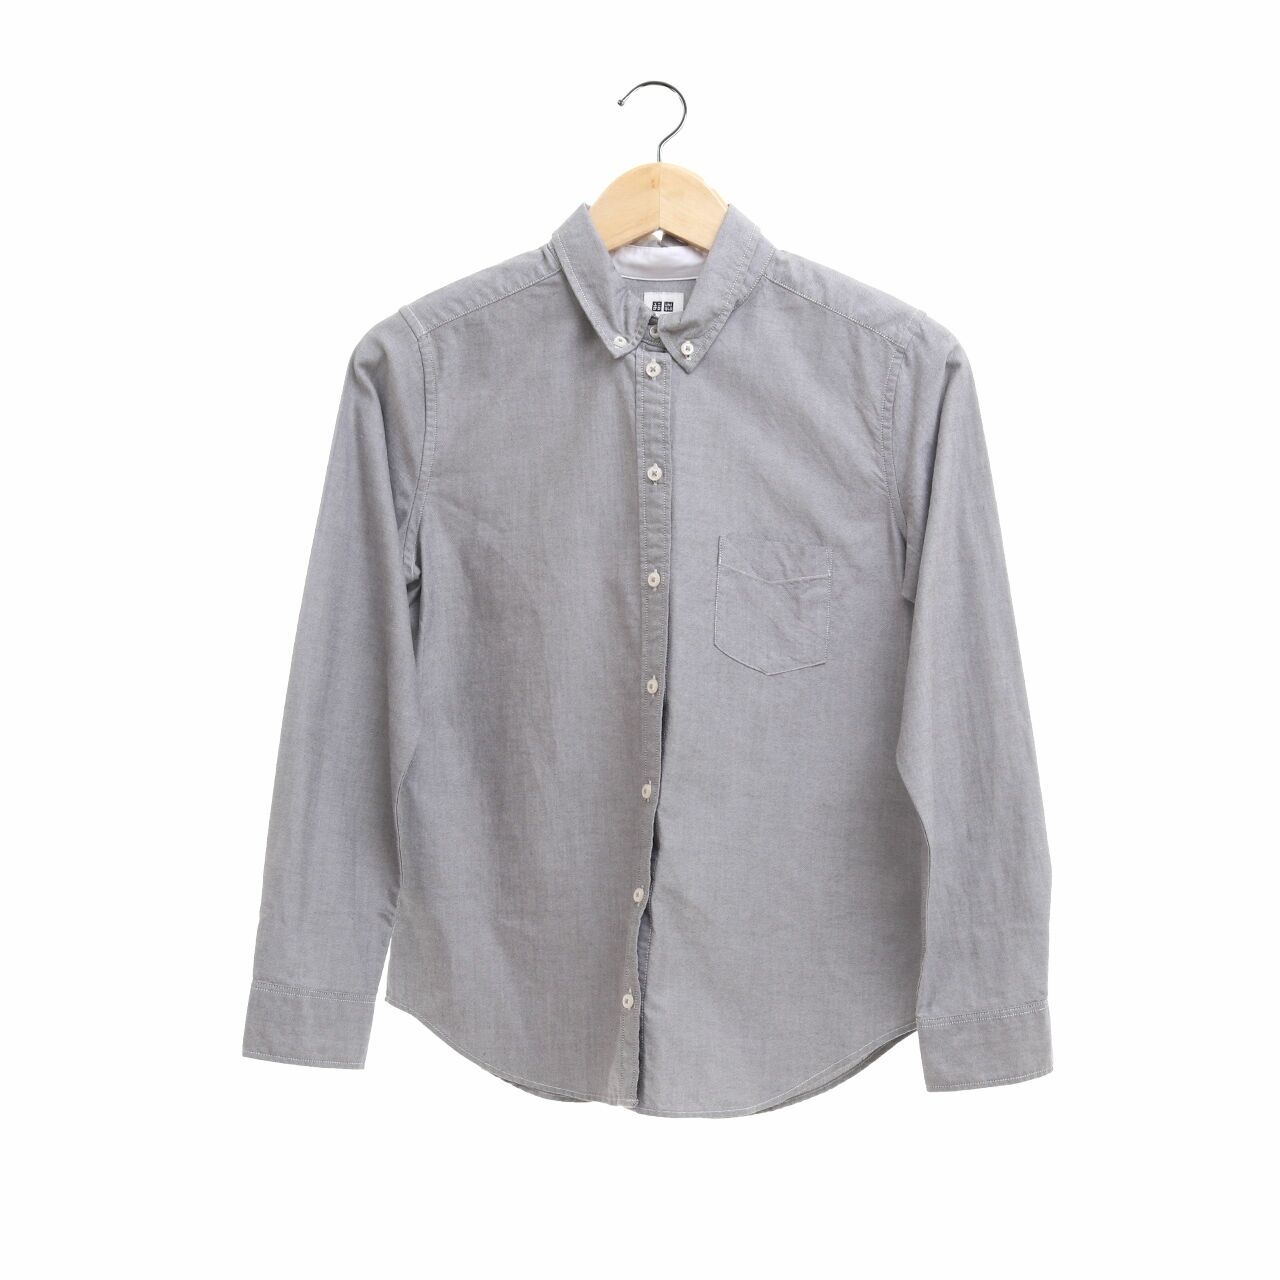 Uniqlo Grey Shirt